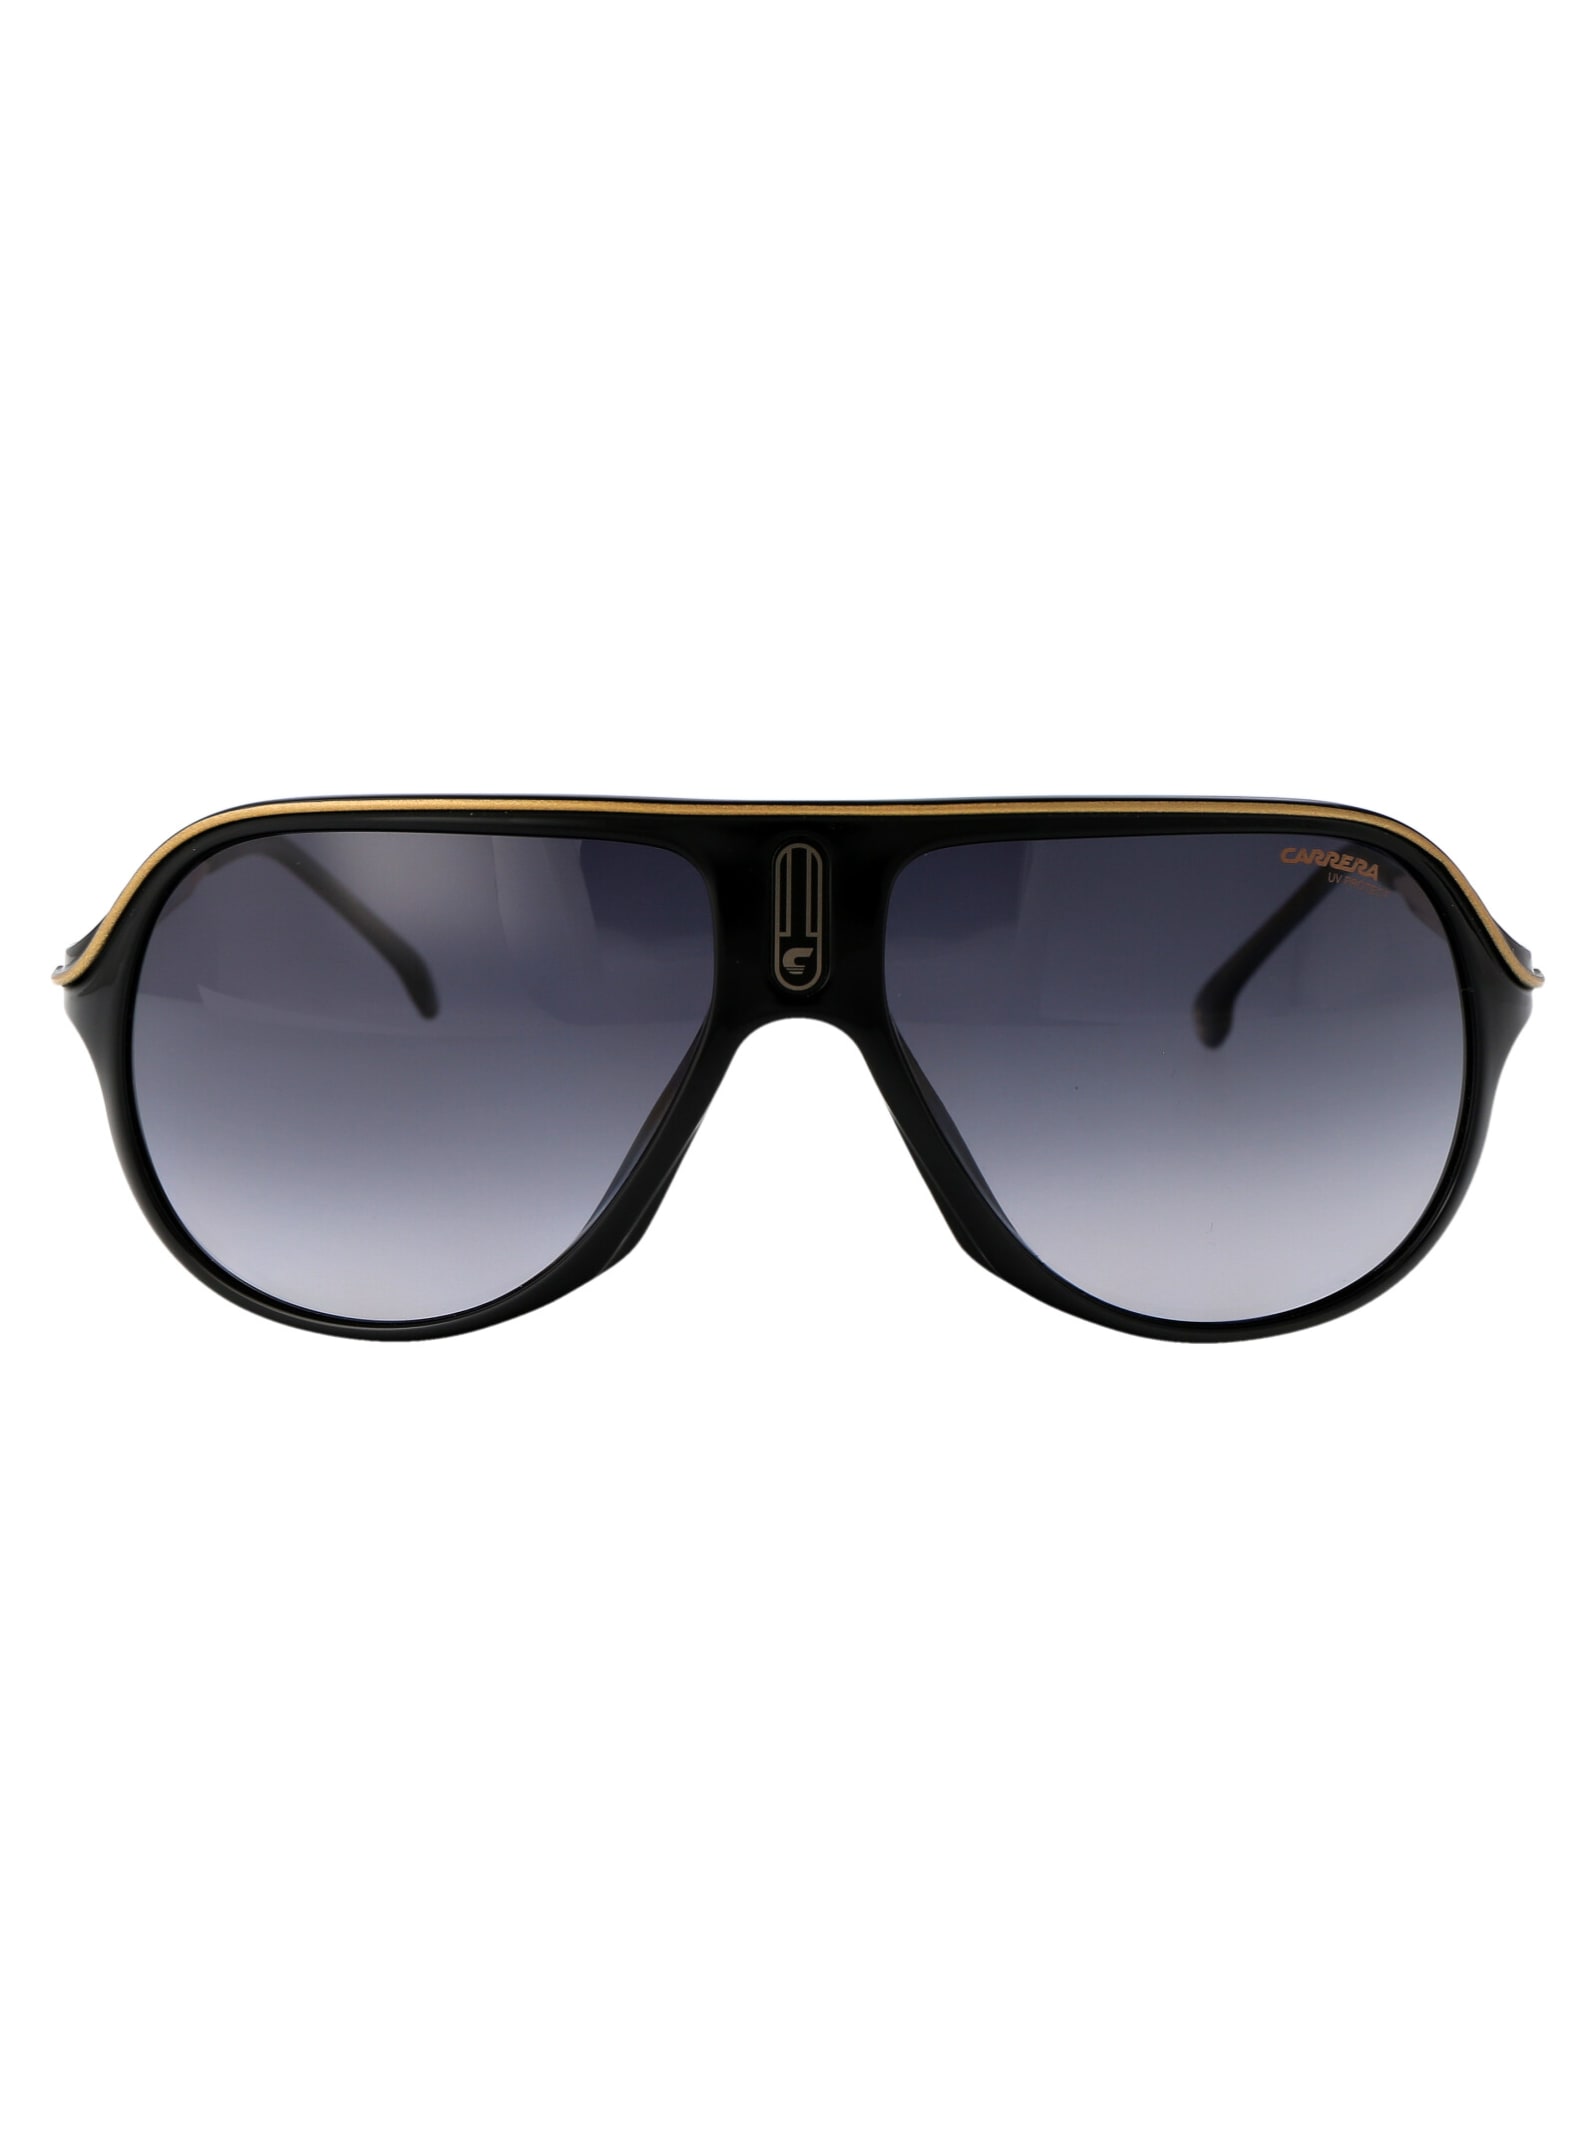 Carrera Safari65/n Sunglasses